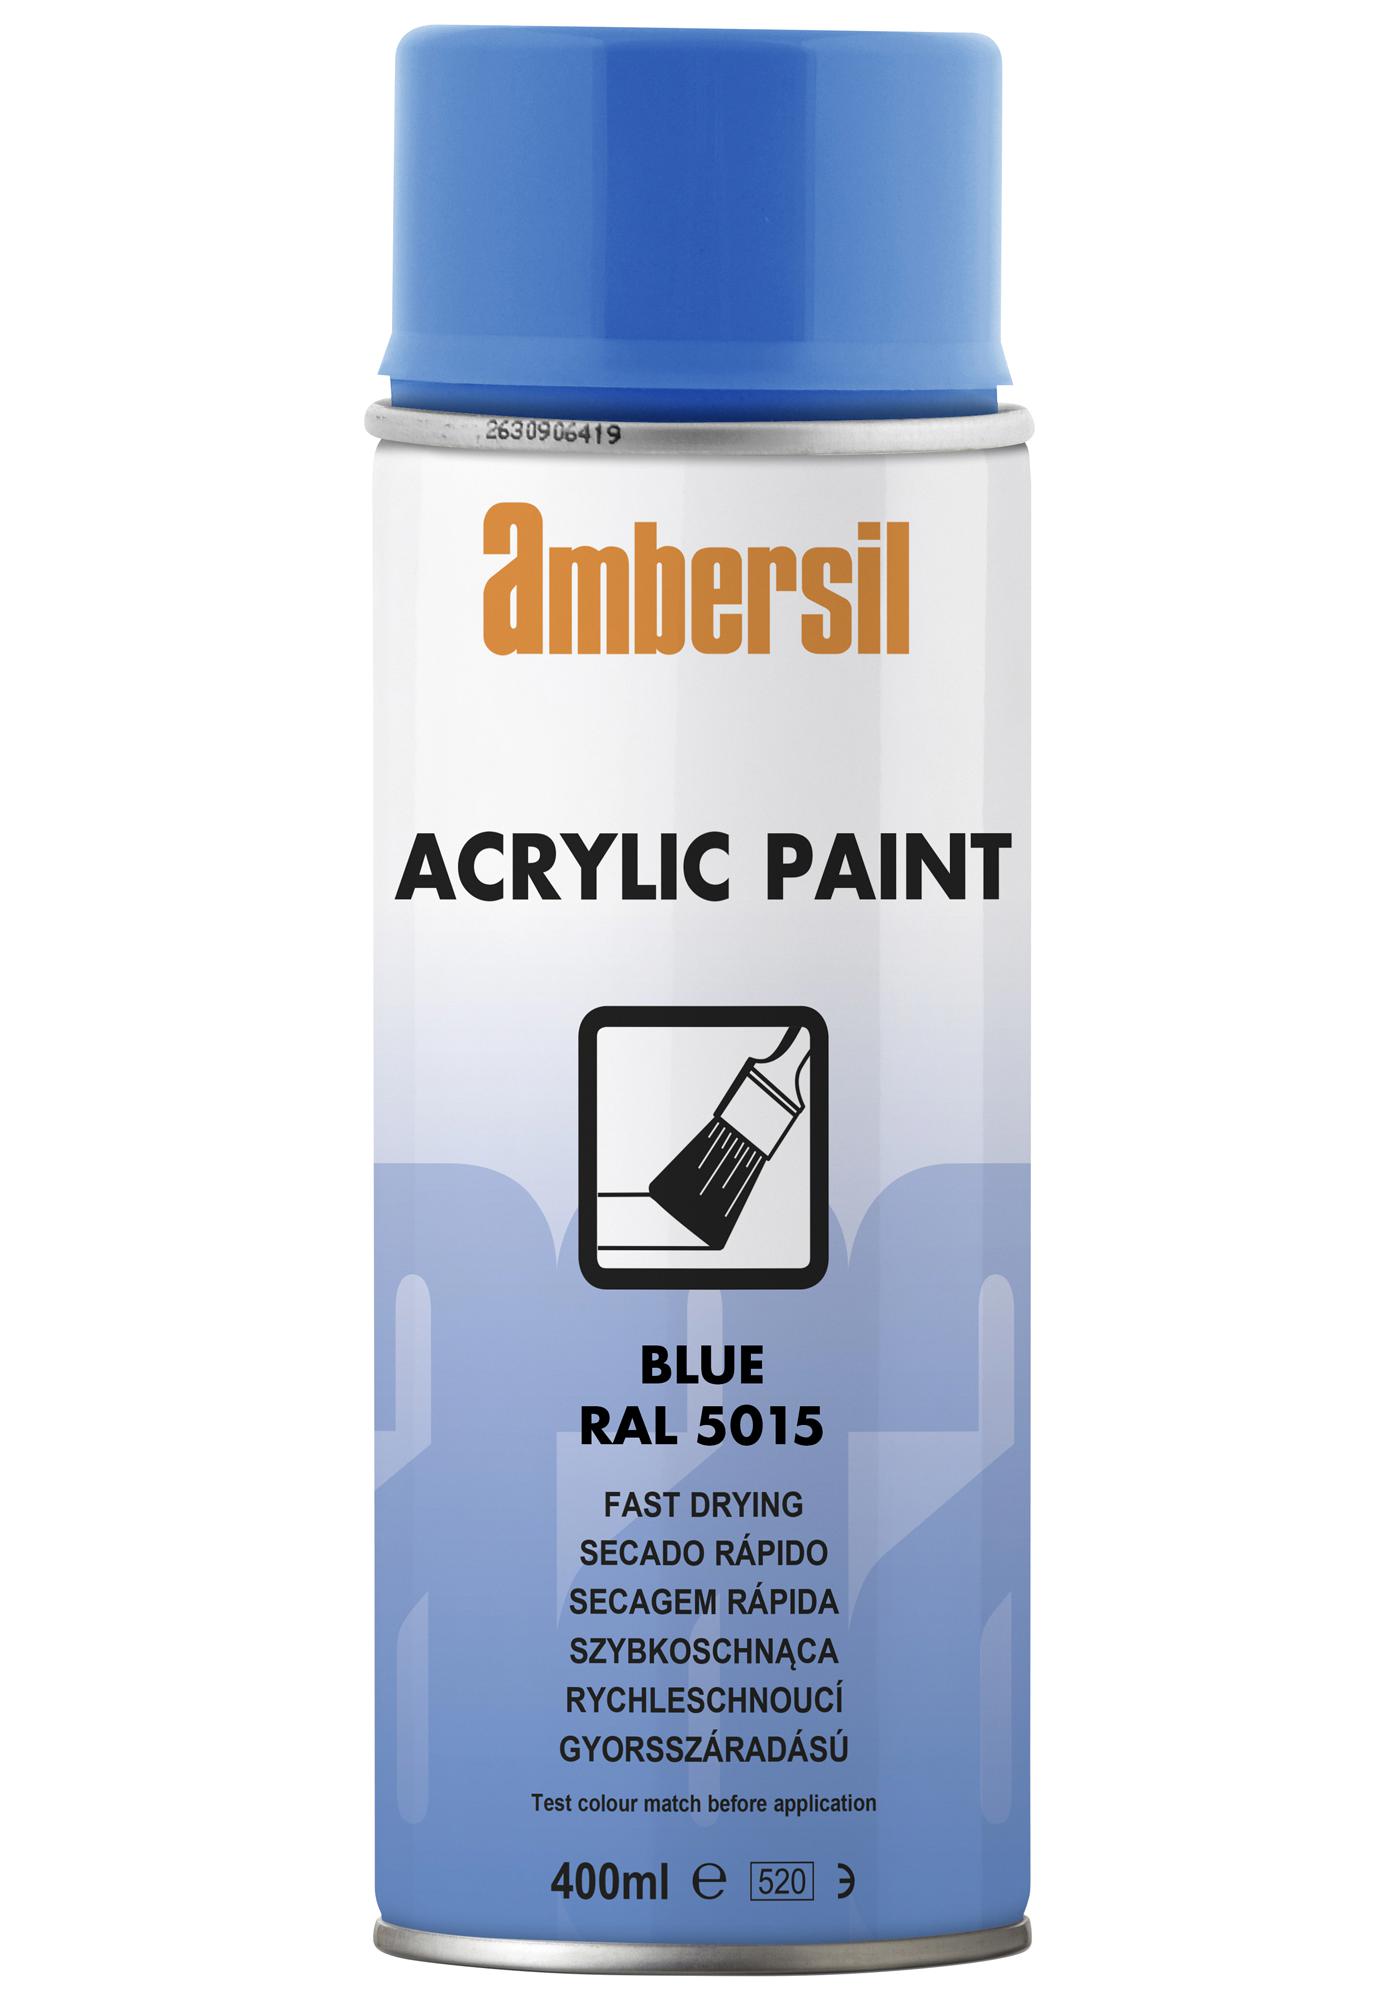 Ambersil Acrylic Paint, Blue Ral 5015, 400Ml Conformal Coating, Aerosol, Blue, 400Ml